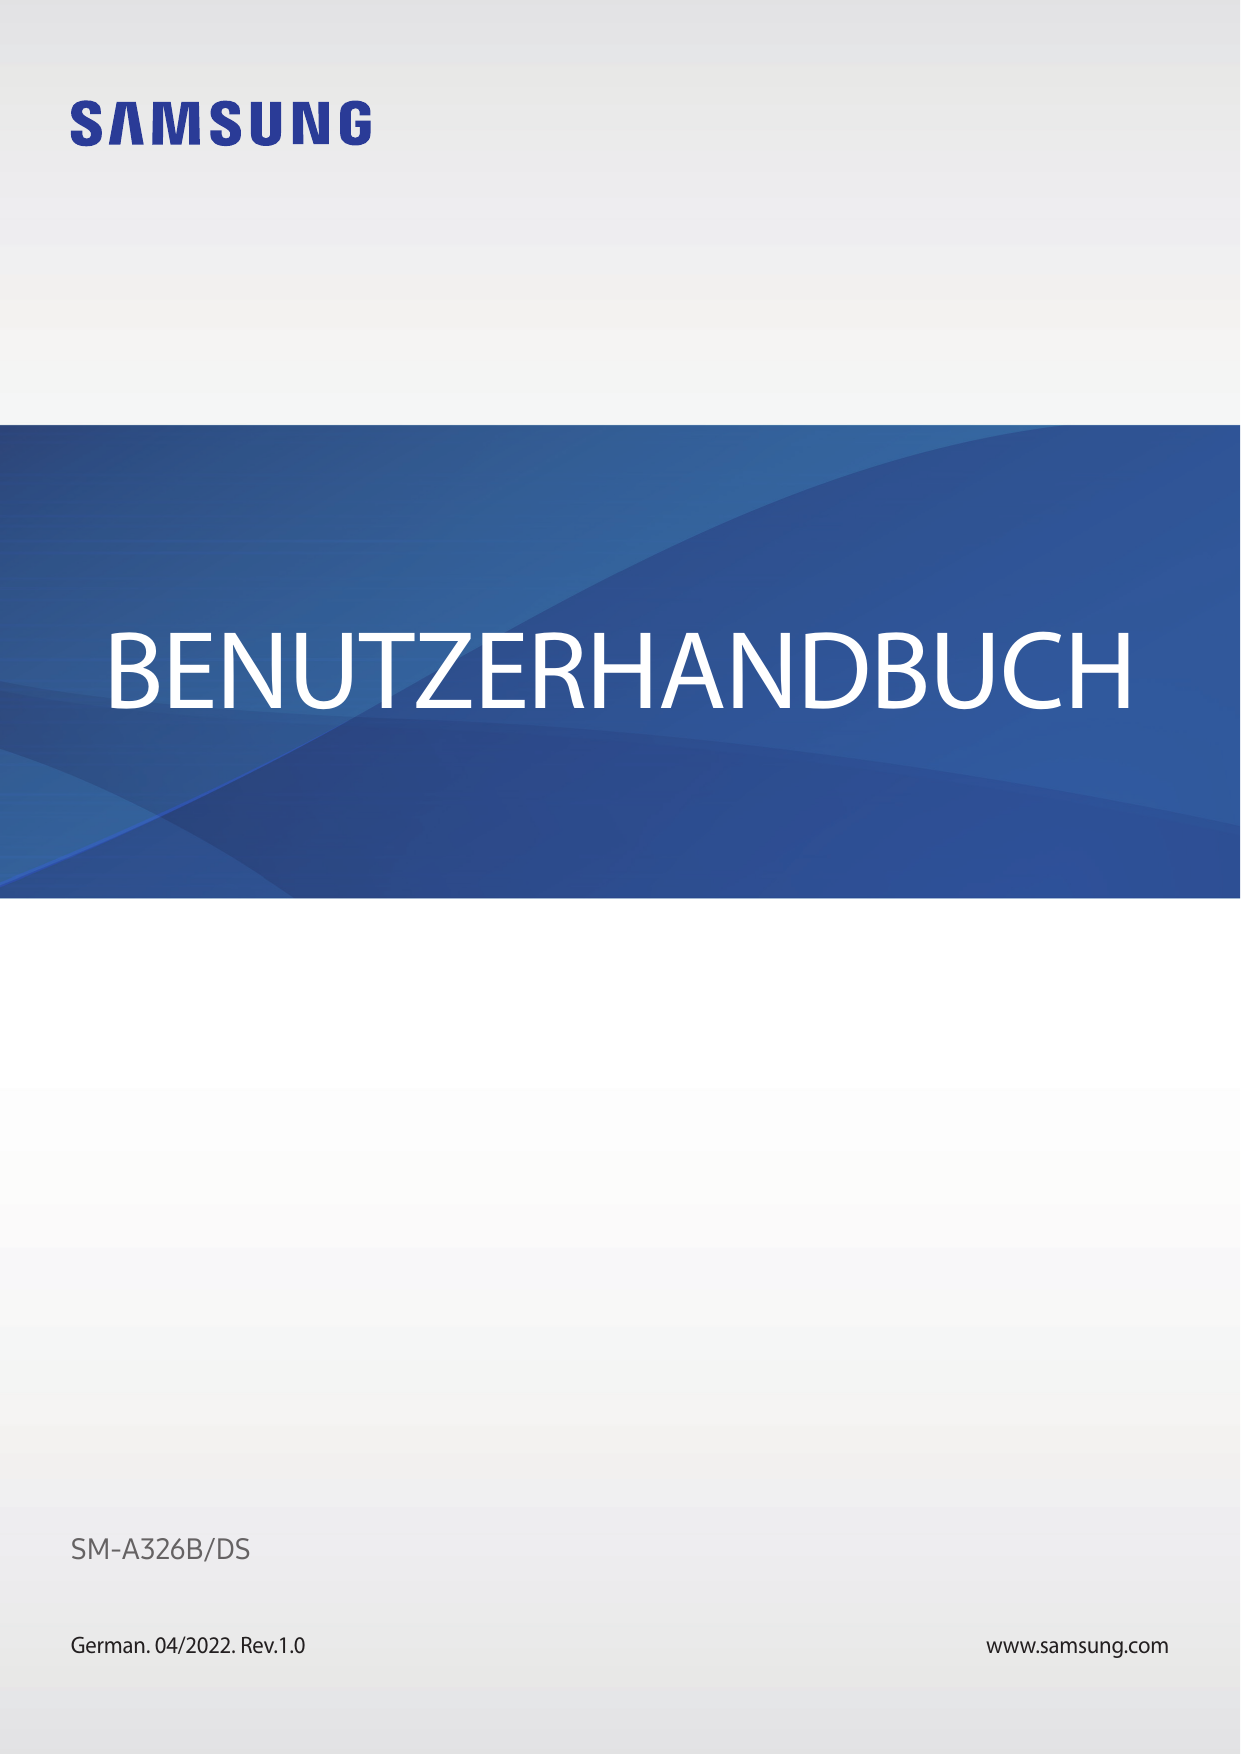 BENUTZERHANDBUCHSM-A326B/DSGerman. 04/2022. Rev.1.0www.samsung.com